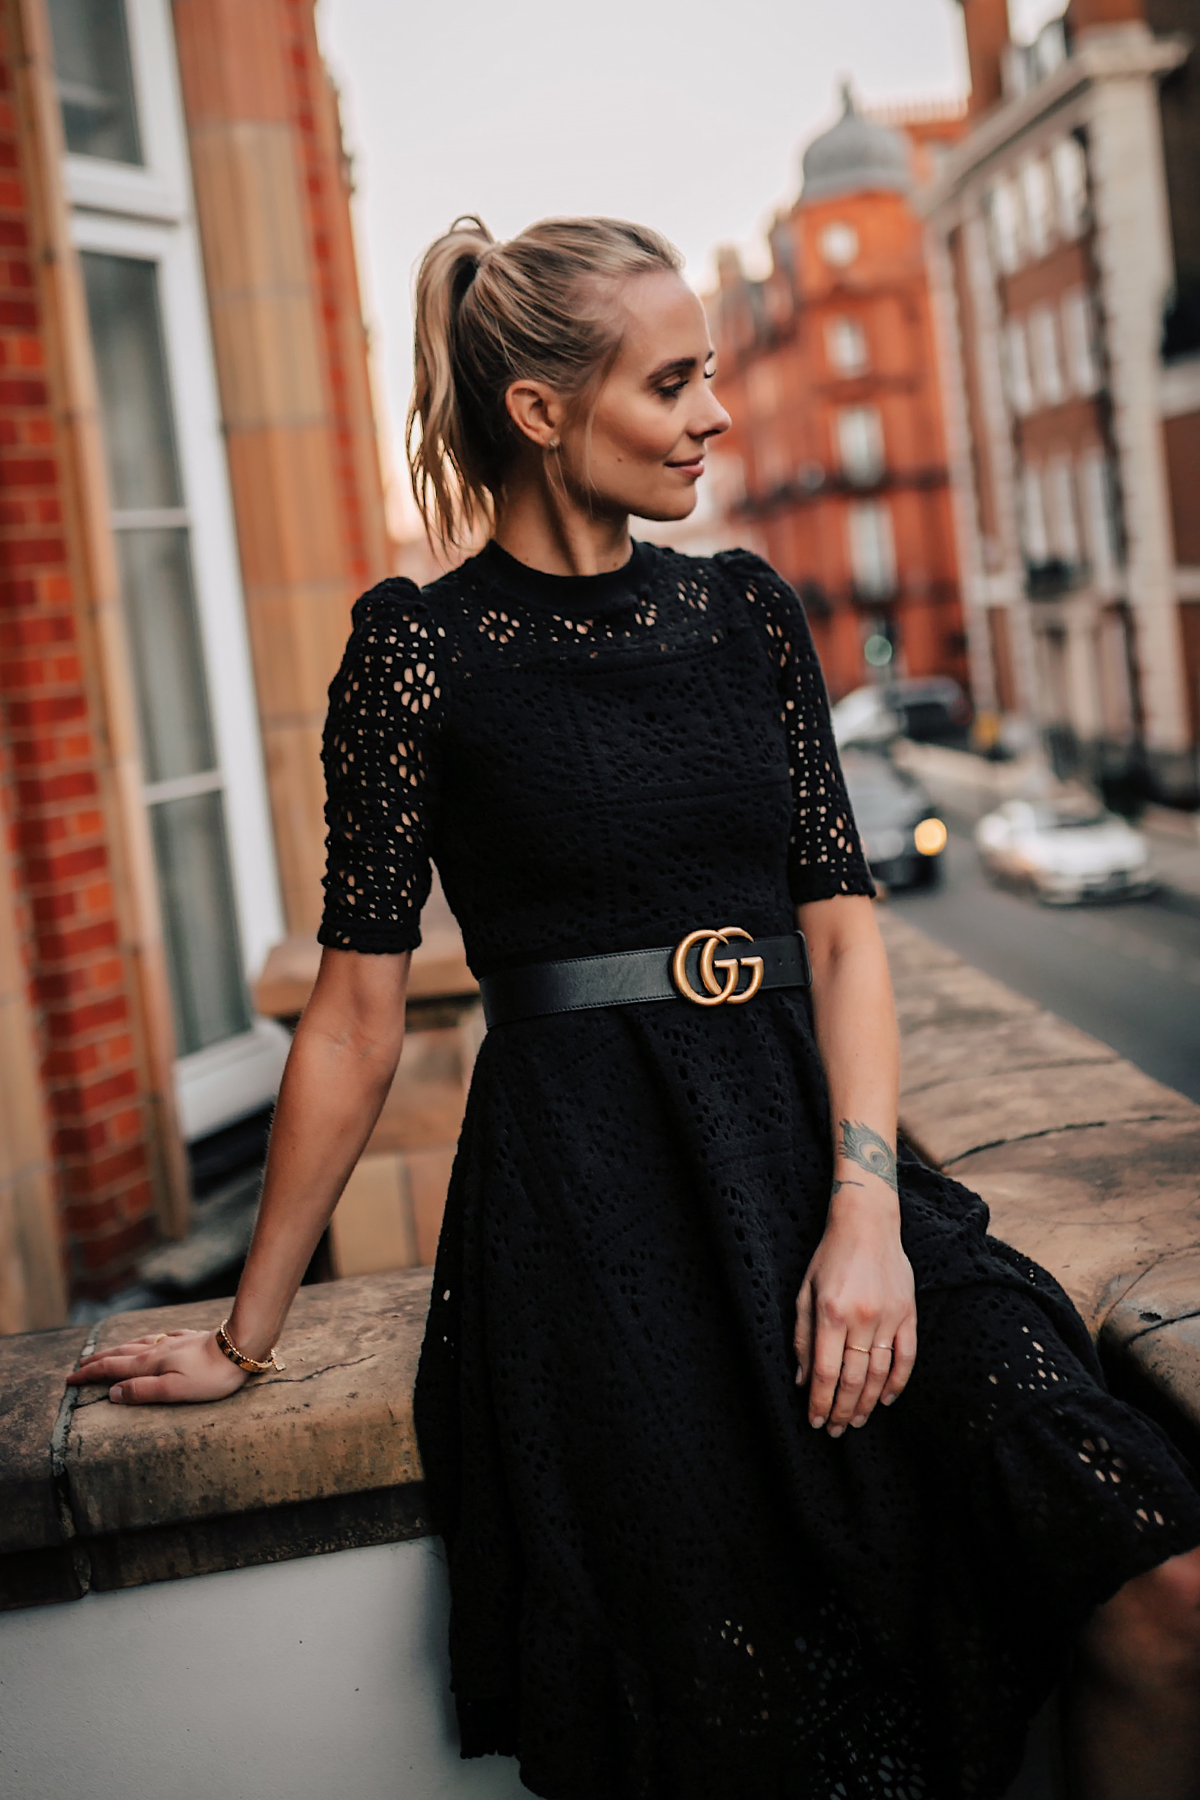 Blonde Women Wearing Black Lace Dress with Gucci Belt on London Balcony